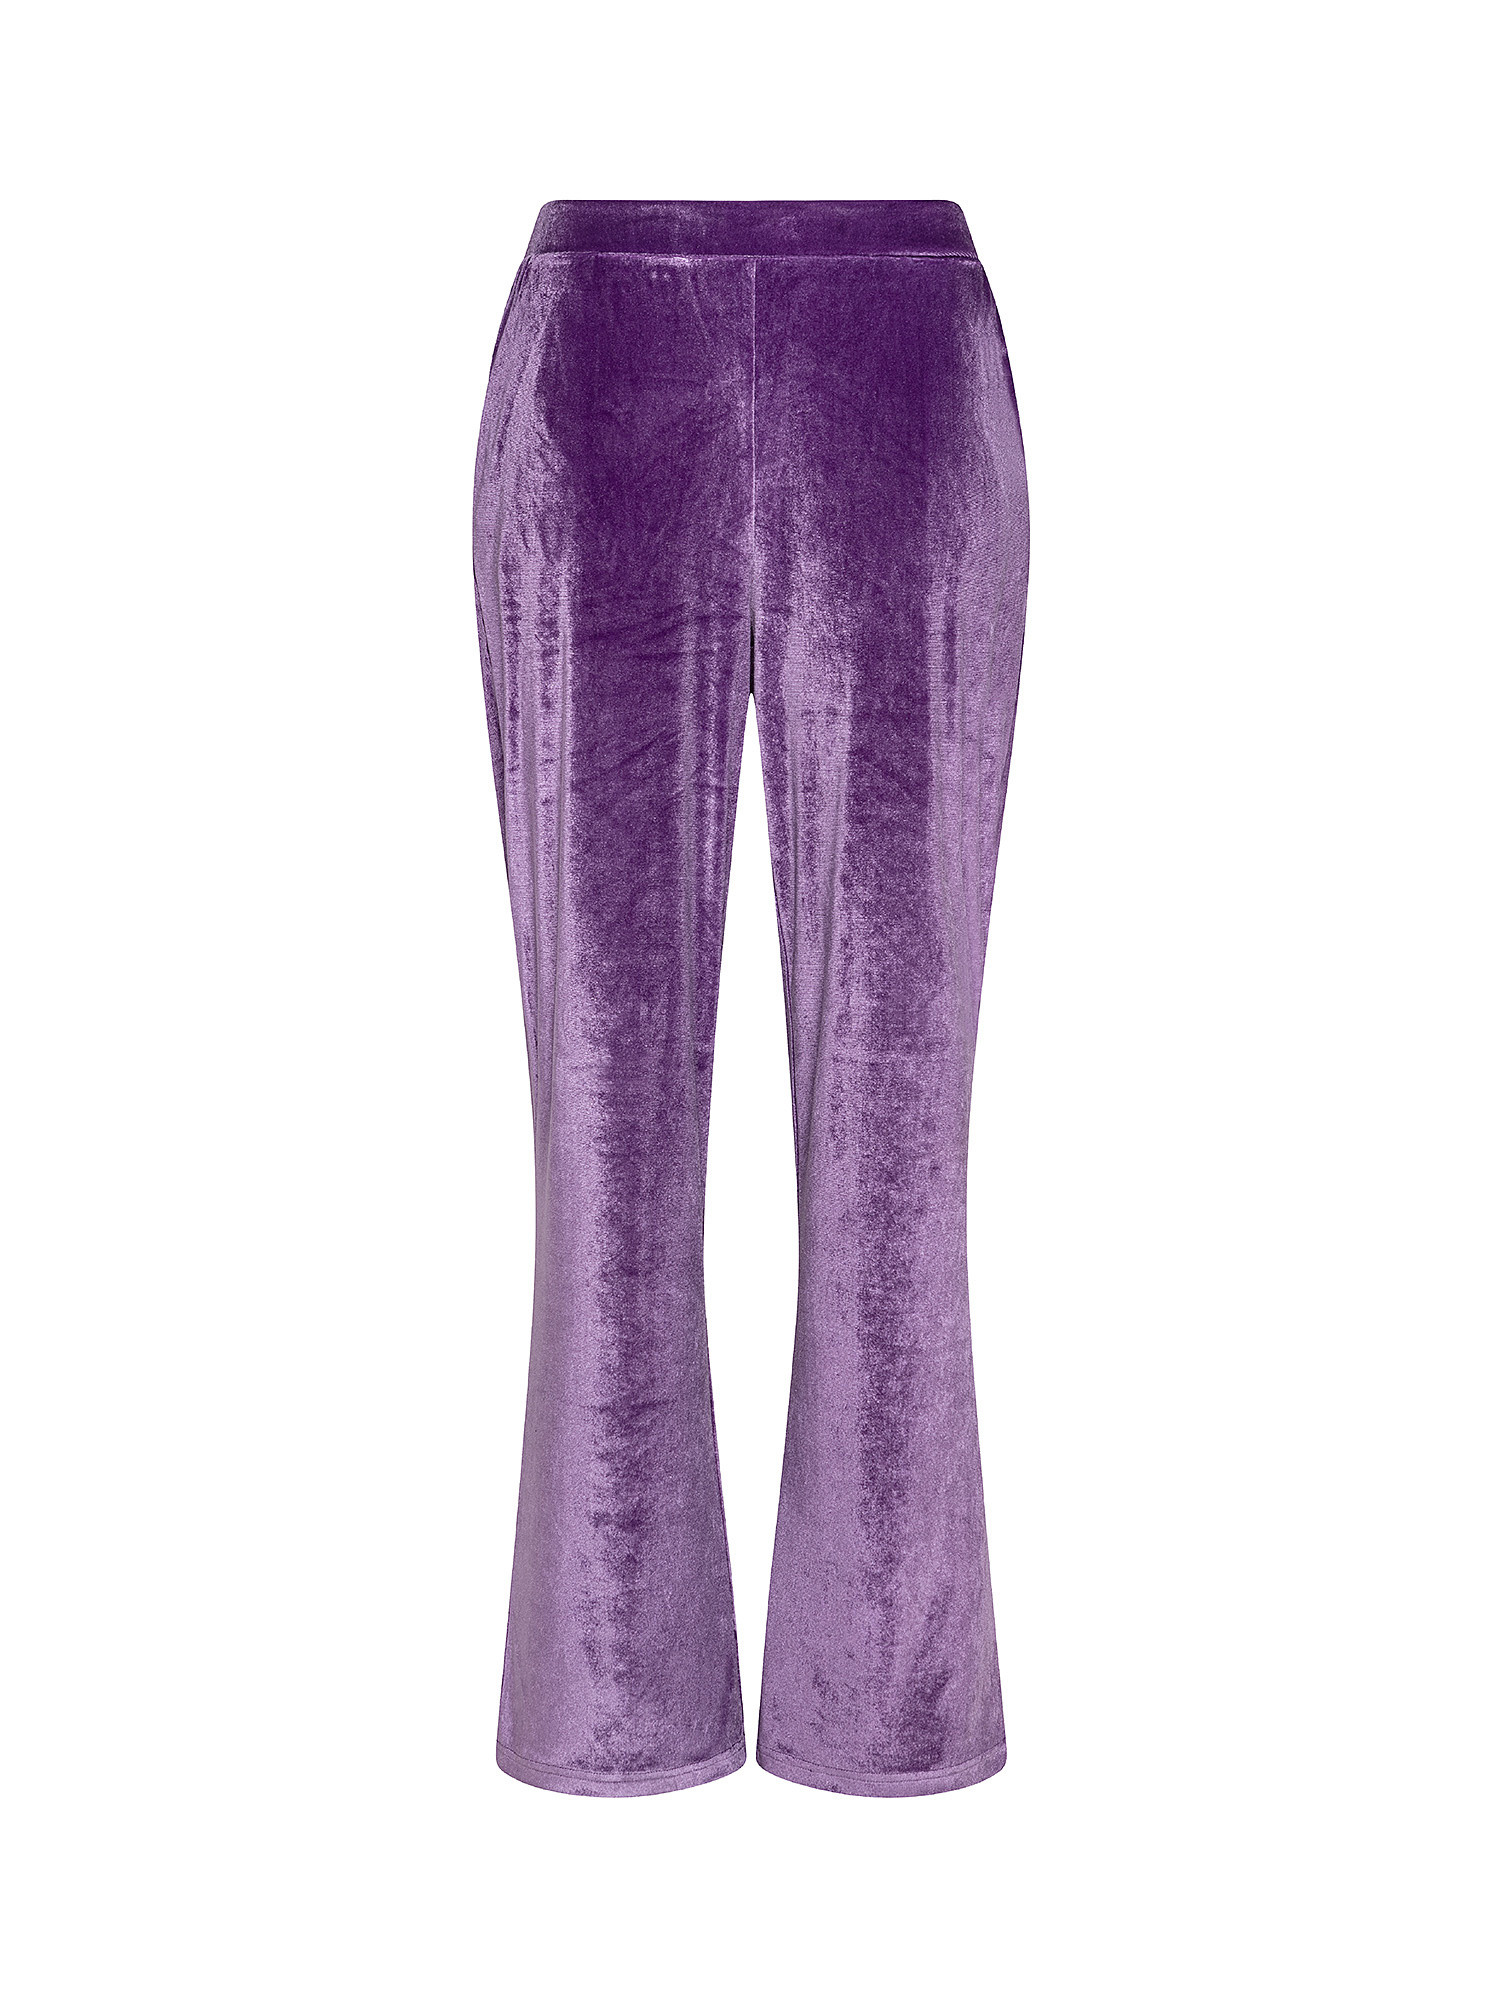 Pantalone in velour, Viola, large image number 0